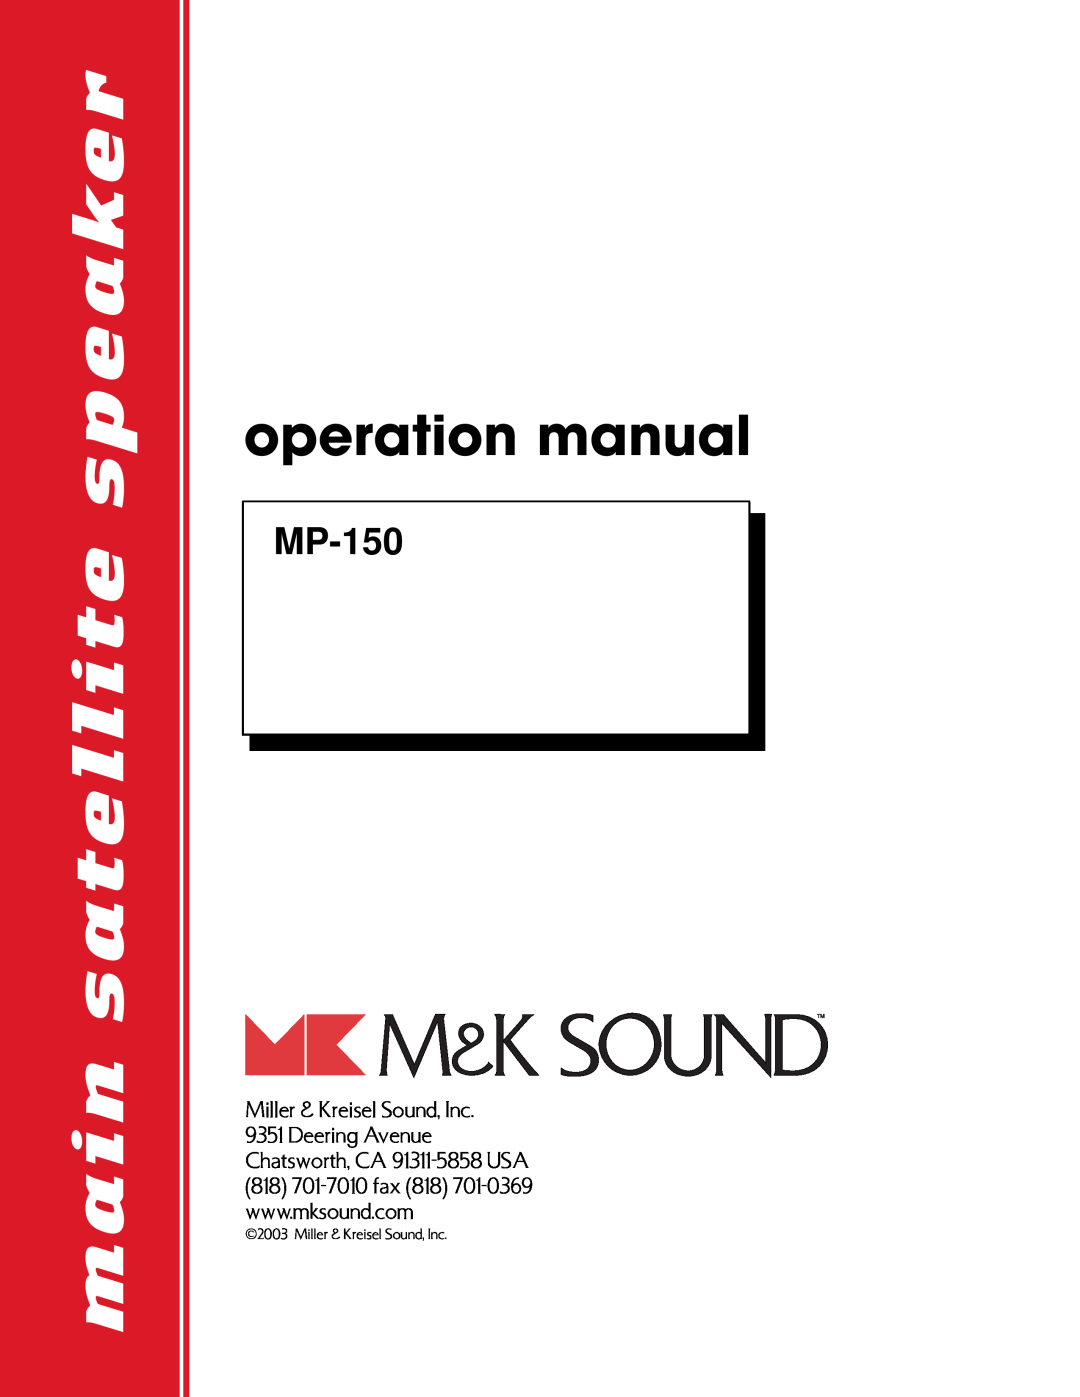 MK Sound MP-150 operation manual main satellite speaker, Miller & Kreisel Sound, Inc 9351 Deering Avenue 